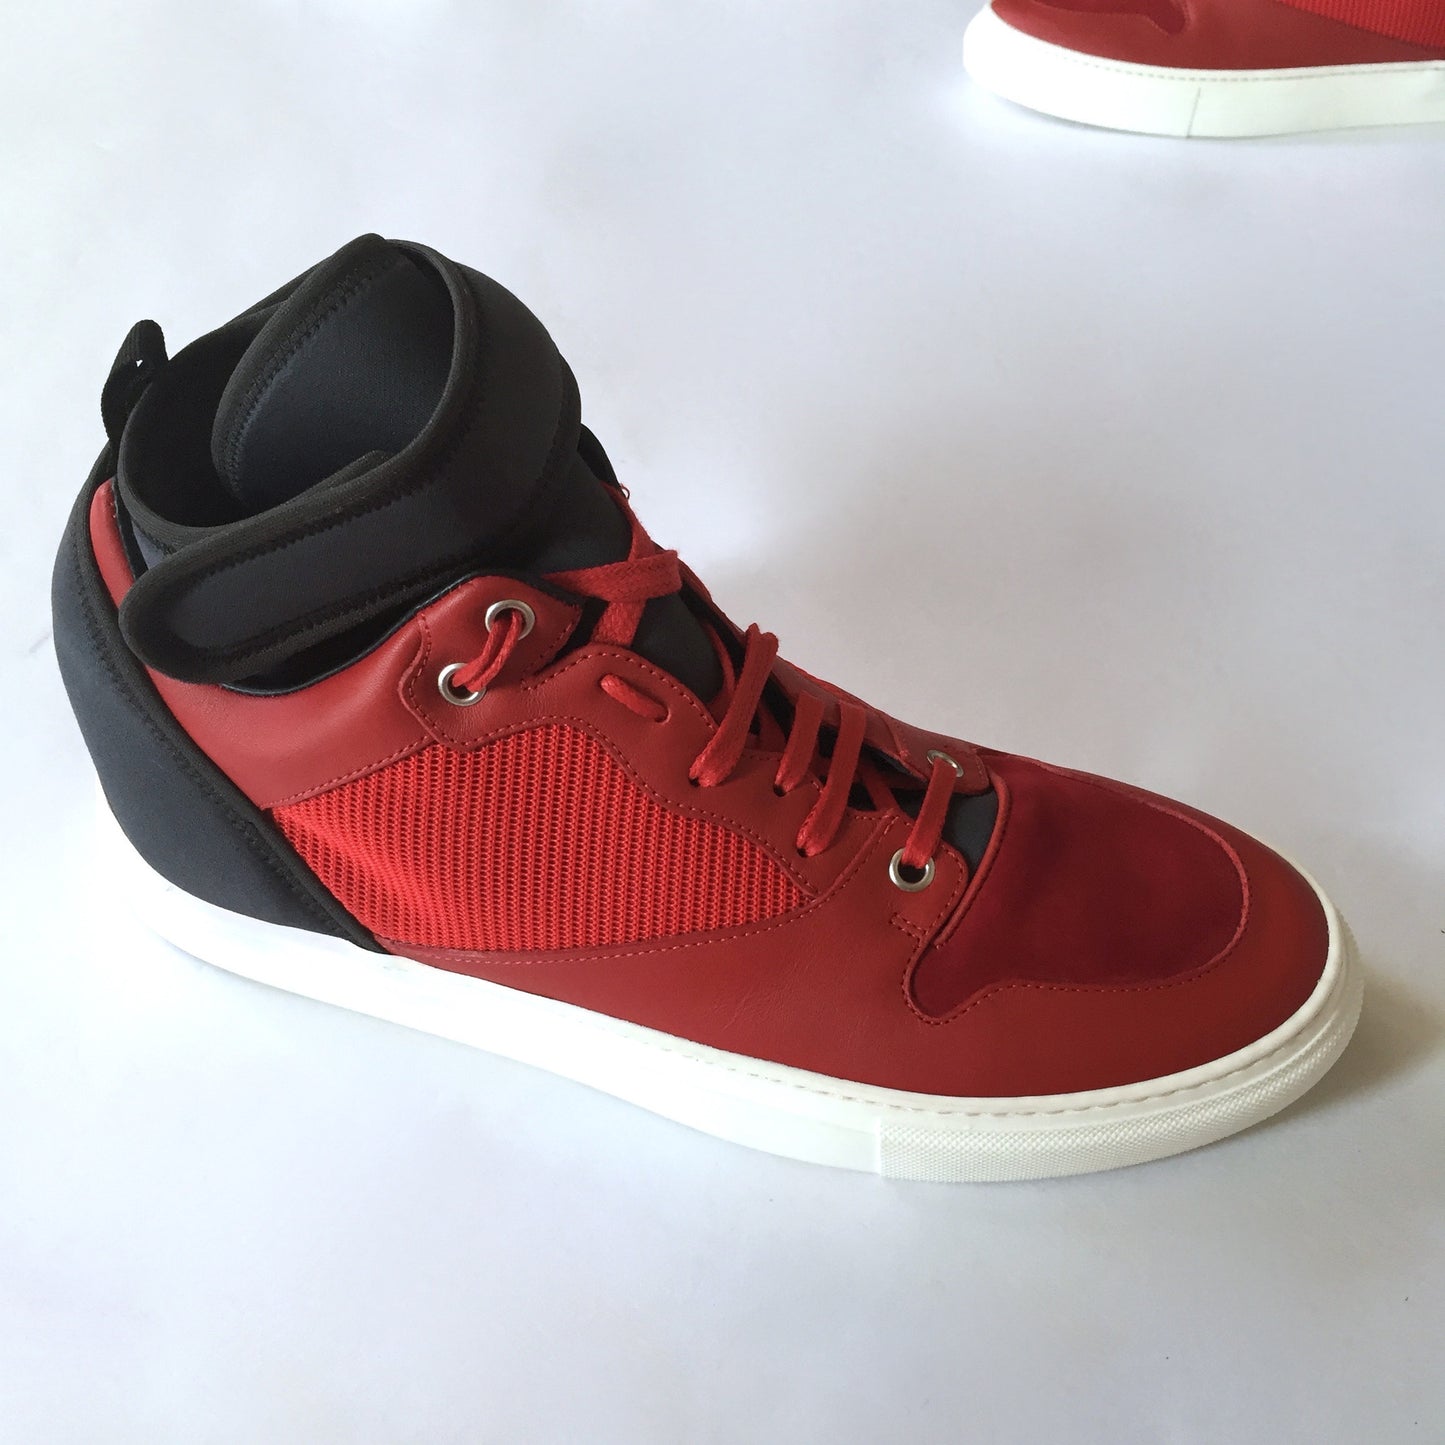 Balenciaga - Leather & Neoprene Mid Top Sneakers